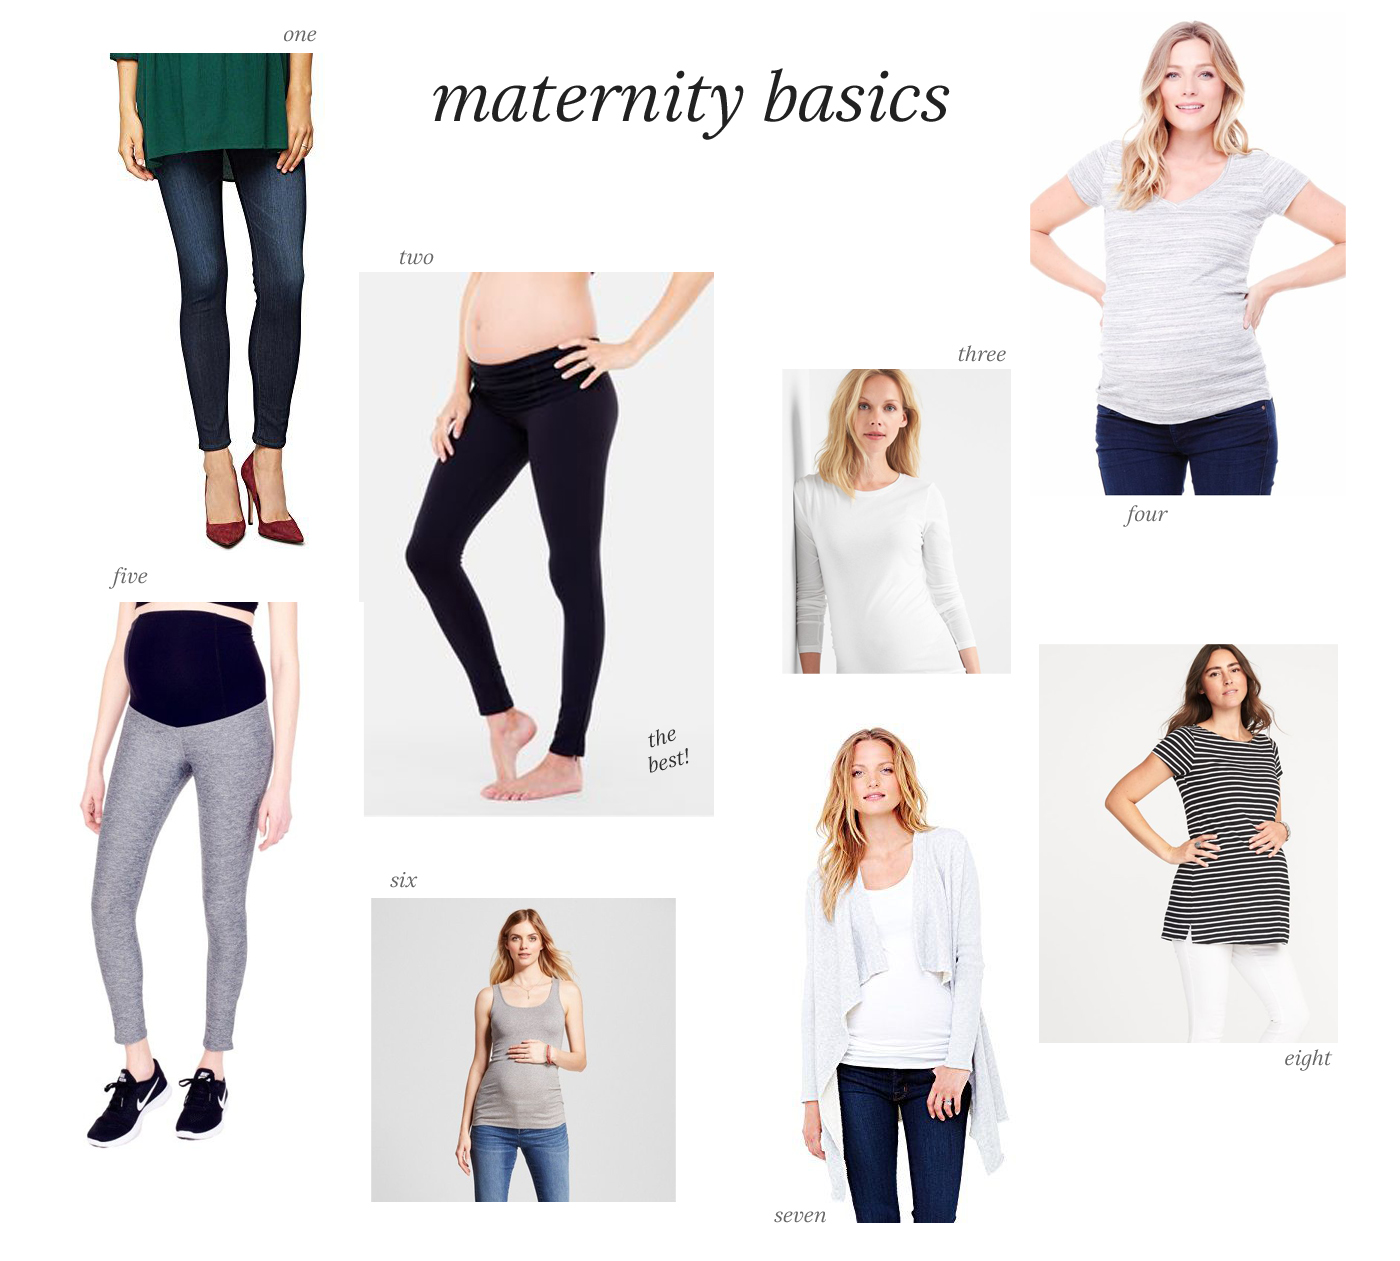 My favorite maternity basics